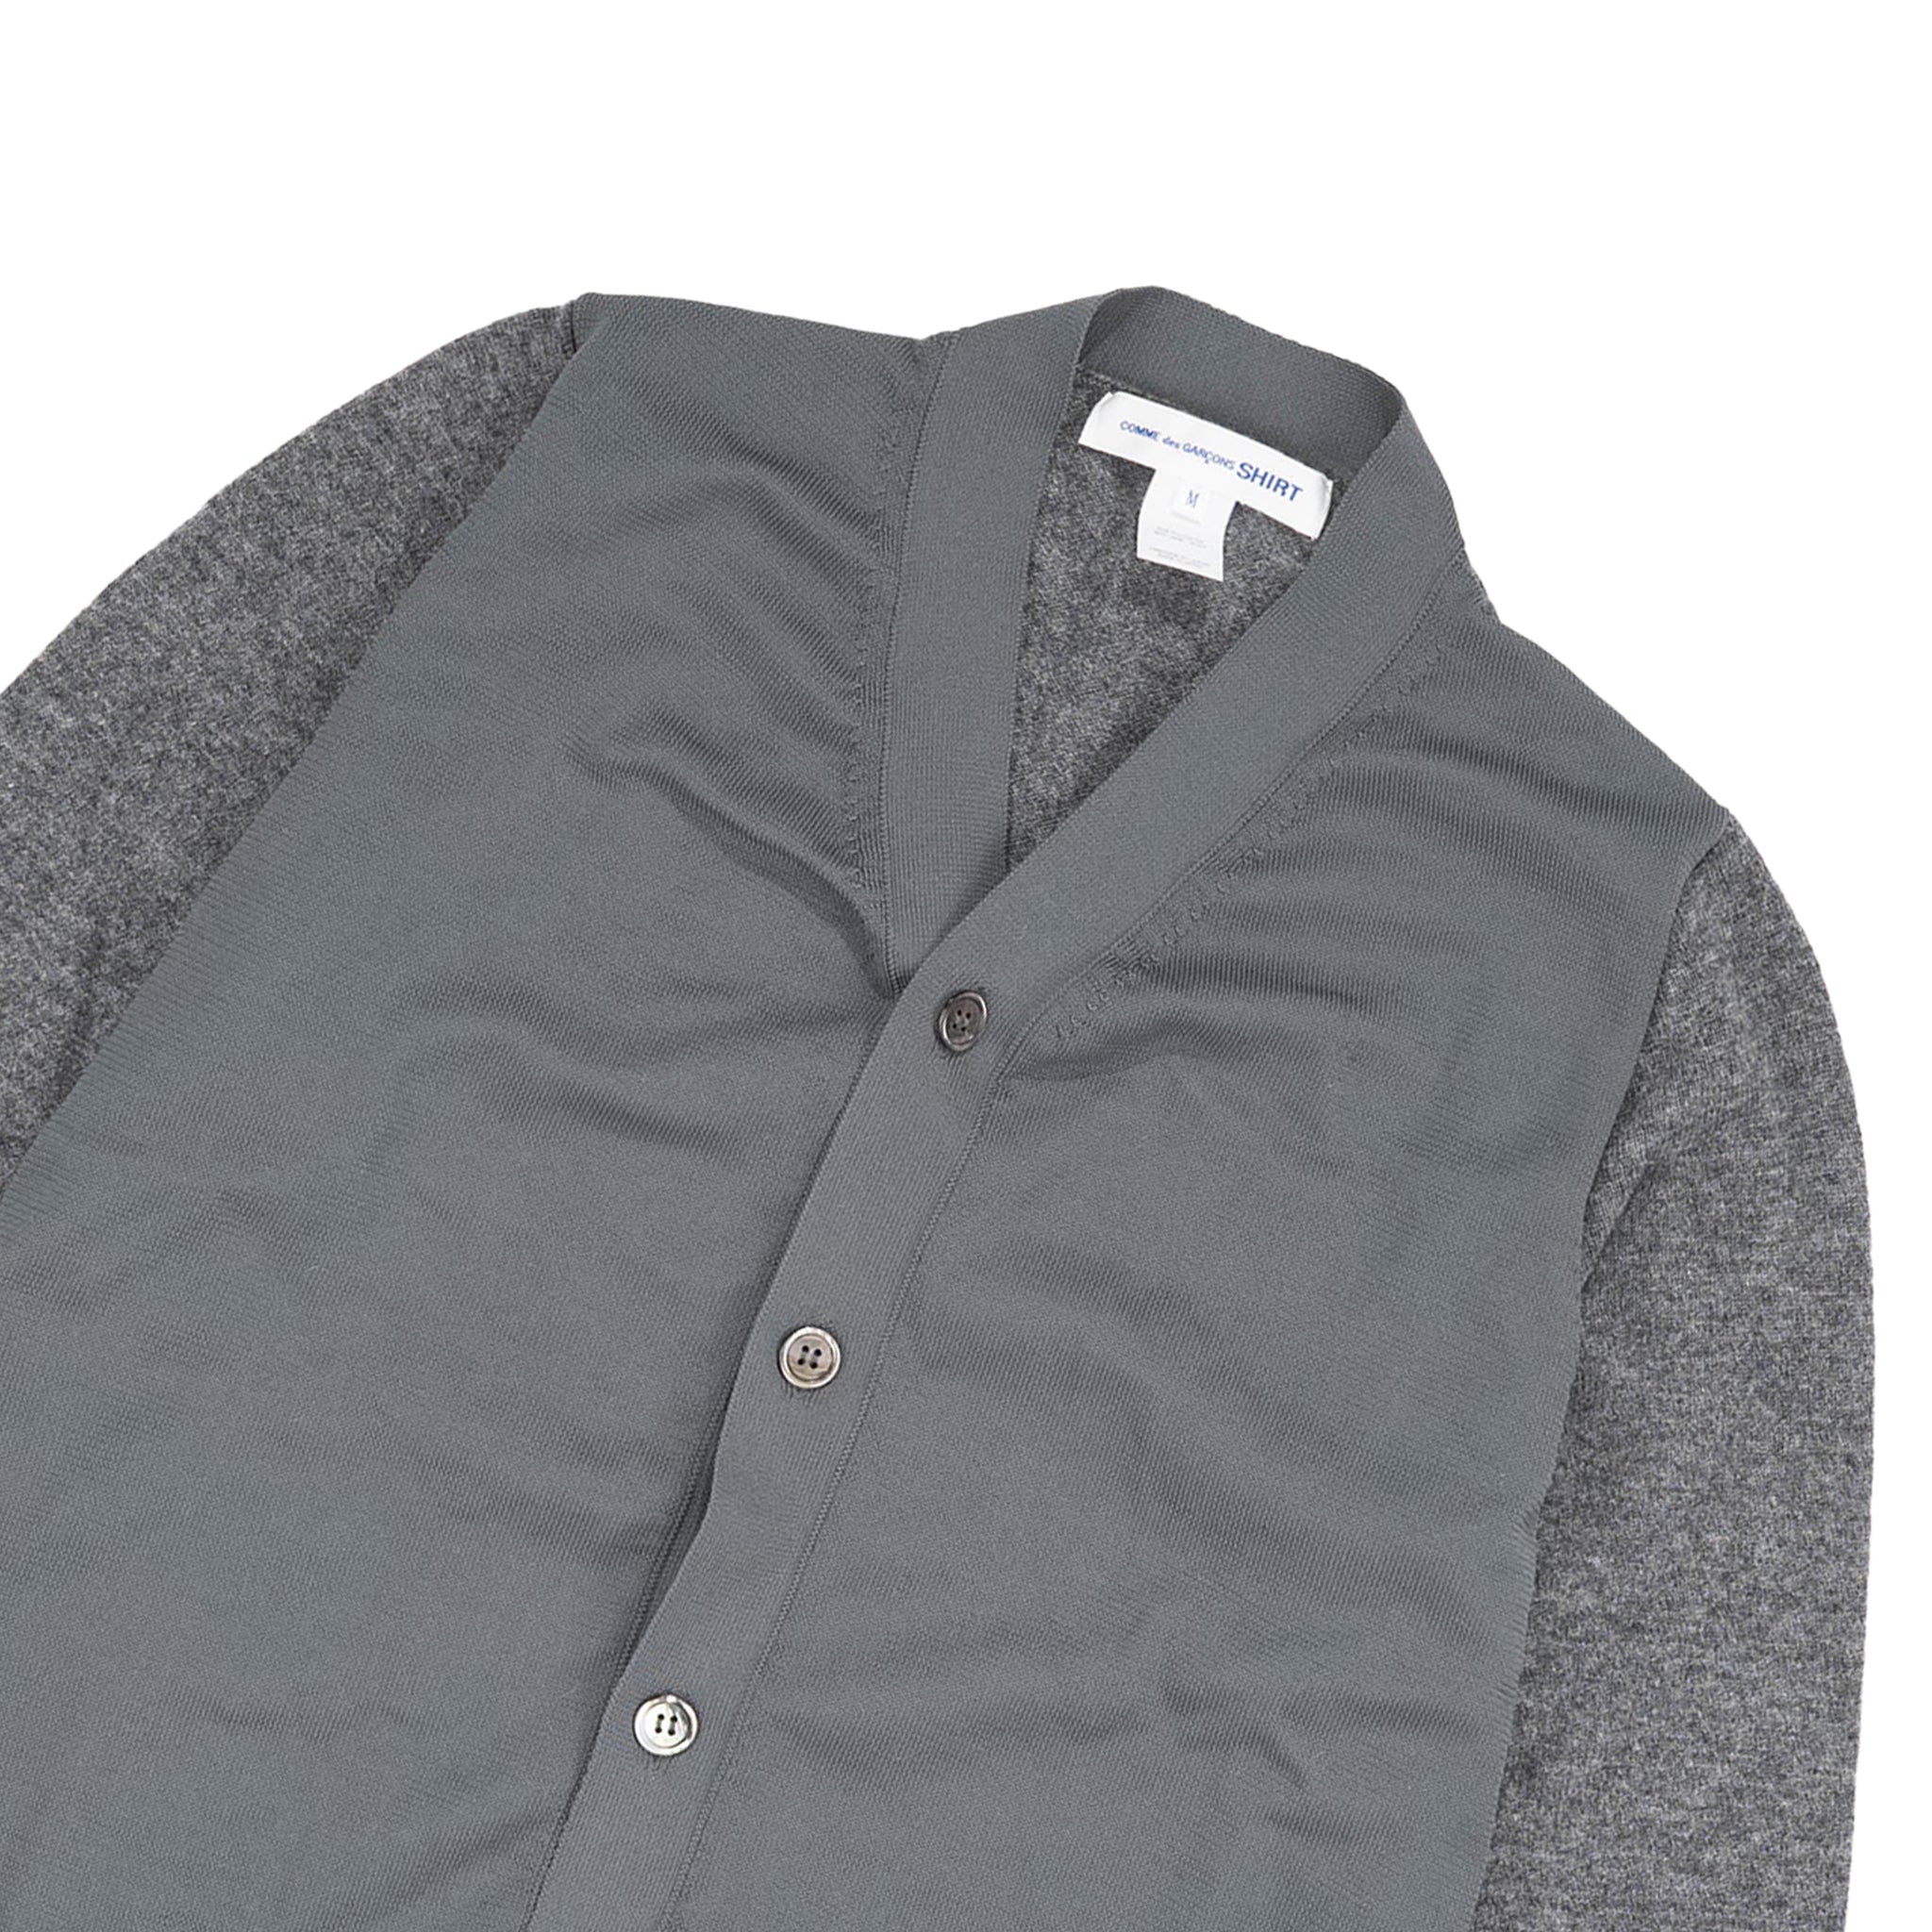 CDG Shirt Knit Cardigan Grey FJ-N014-W22